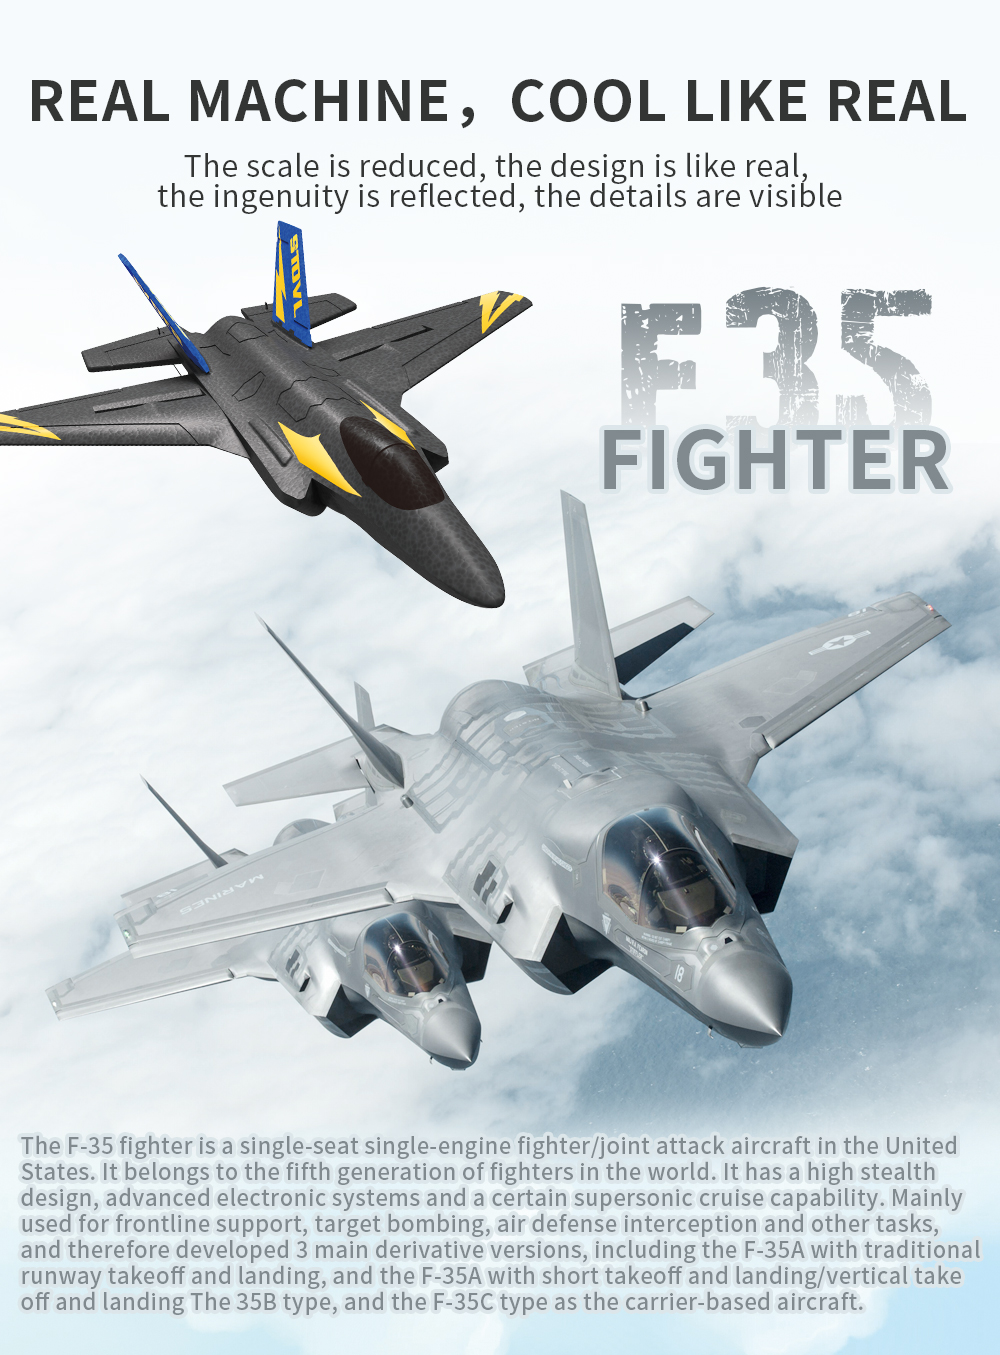 KFPLANE-KF605-F35-Fighter-24G-4CH-6-Axis-Gyroscope-Automatic-Balance-360deg-Rollover-EPP-RC-Glider-A-1845018-3